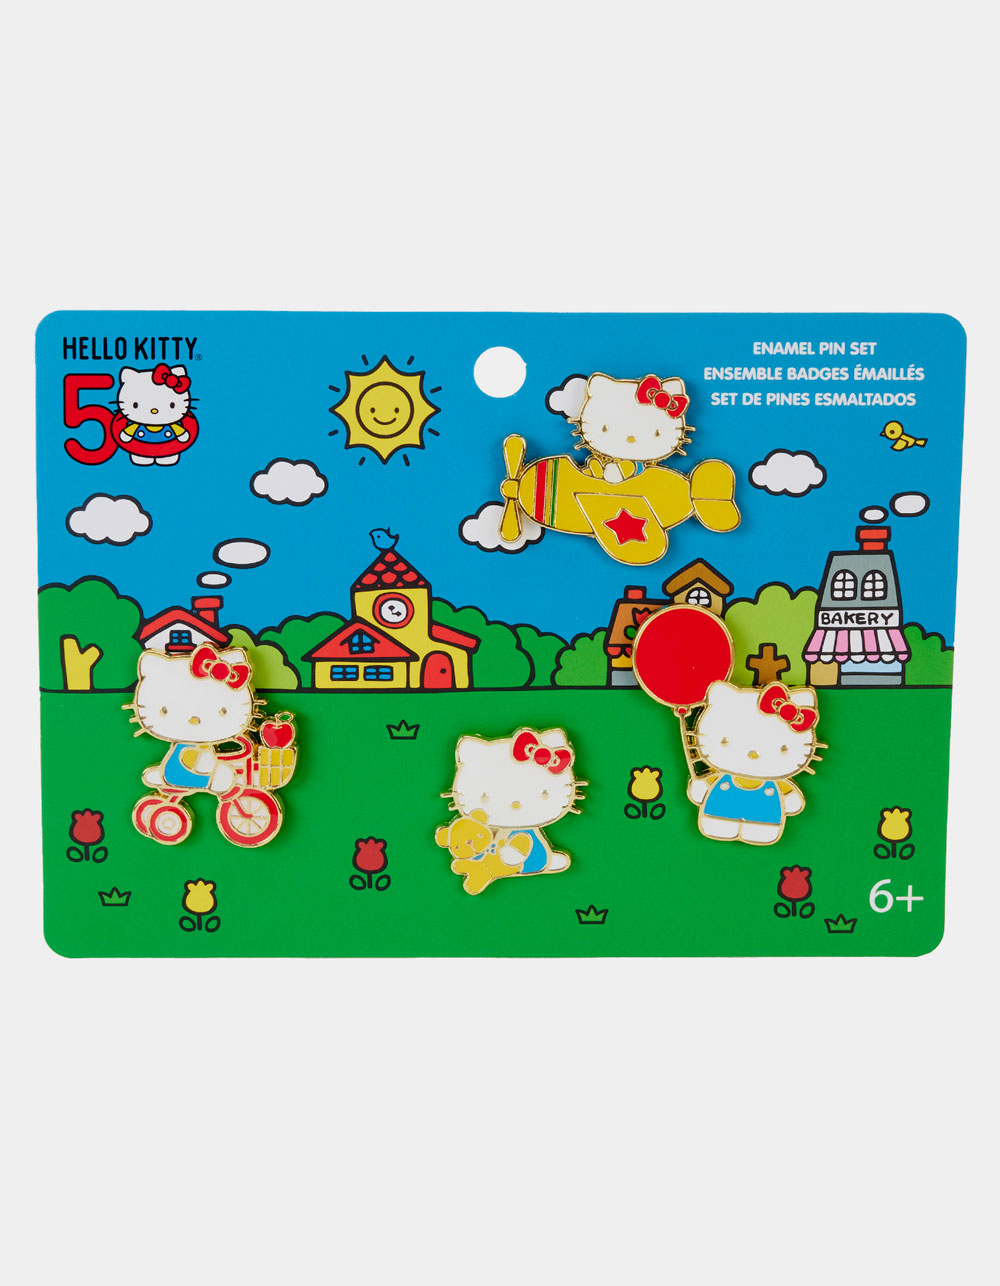 LOUNGEFLY x Sanrio Hello Kitty 50th Anniversary Enamel Pin Set